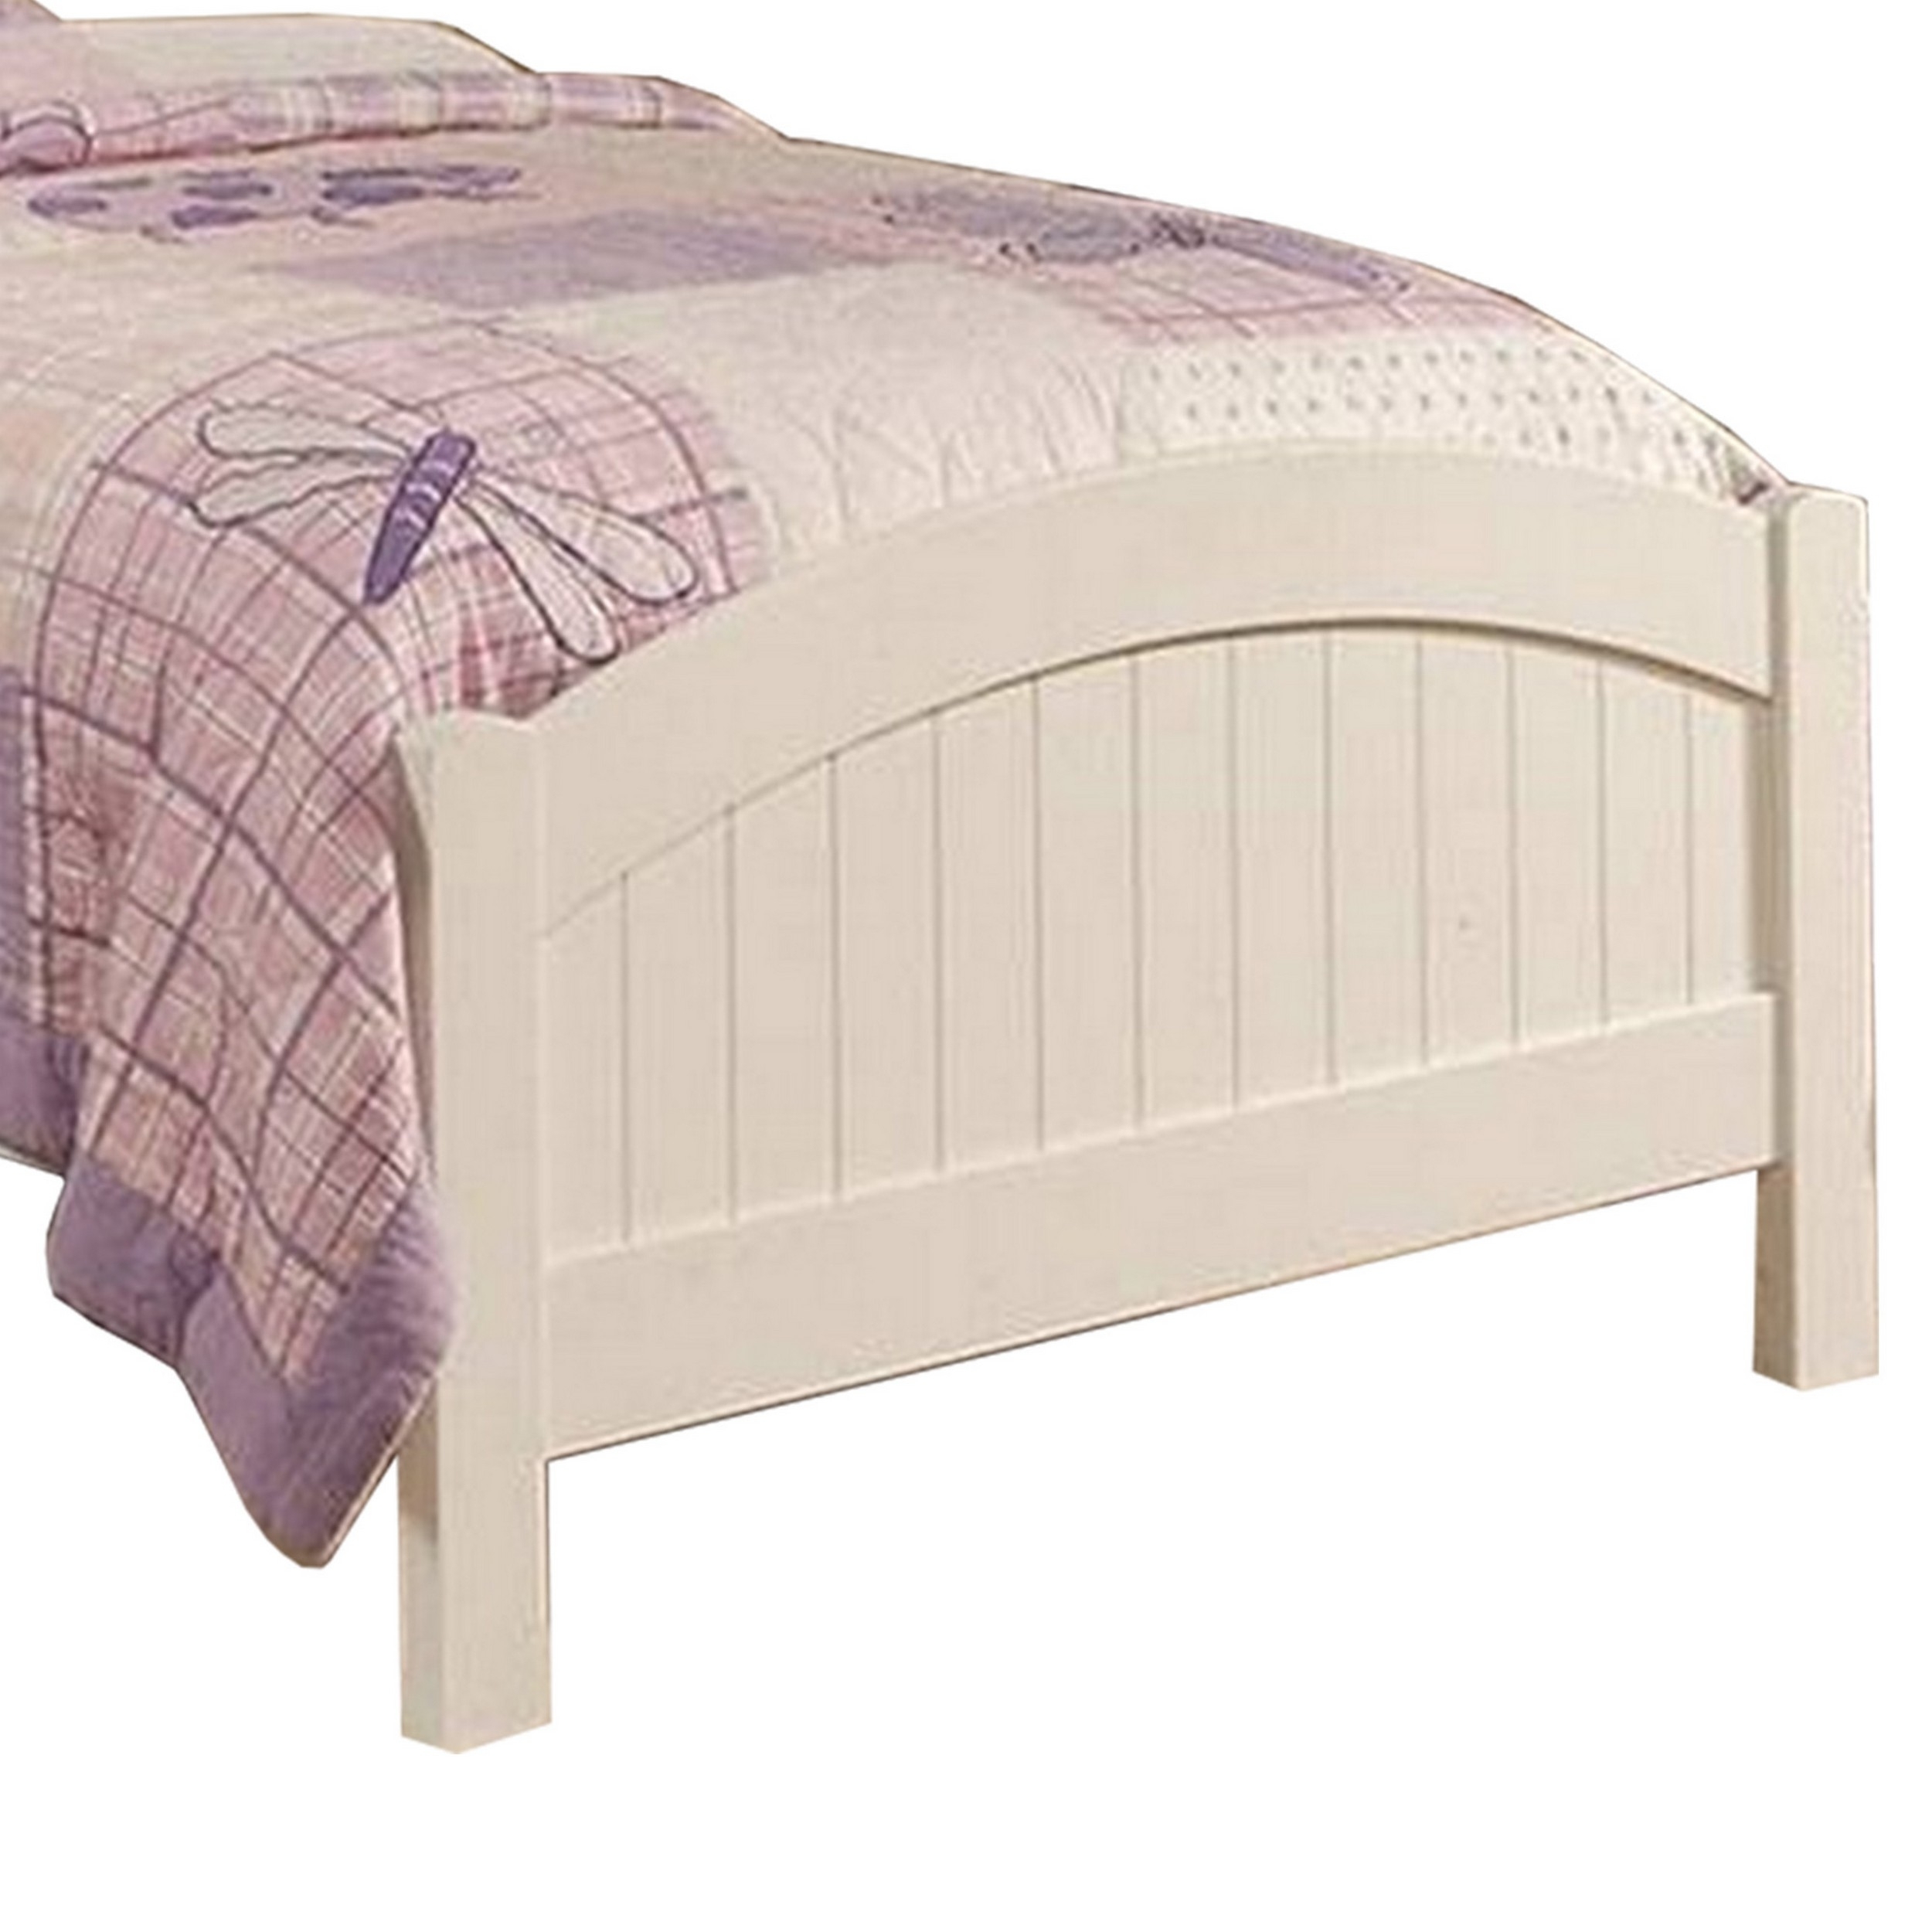 Shov Twin Size Bed, Arched Headboard, Classic White Wood Construction - Saltoro Sherpi